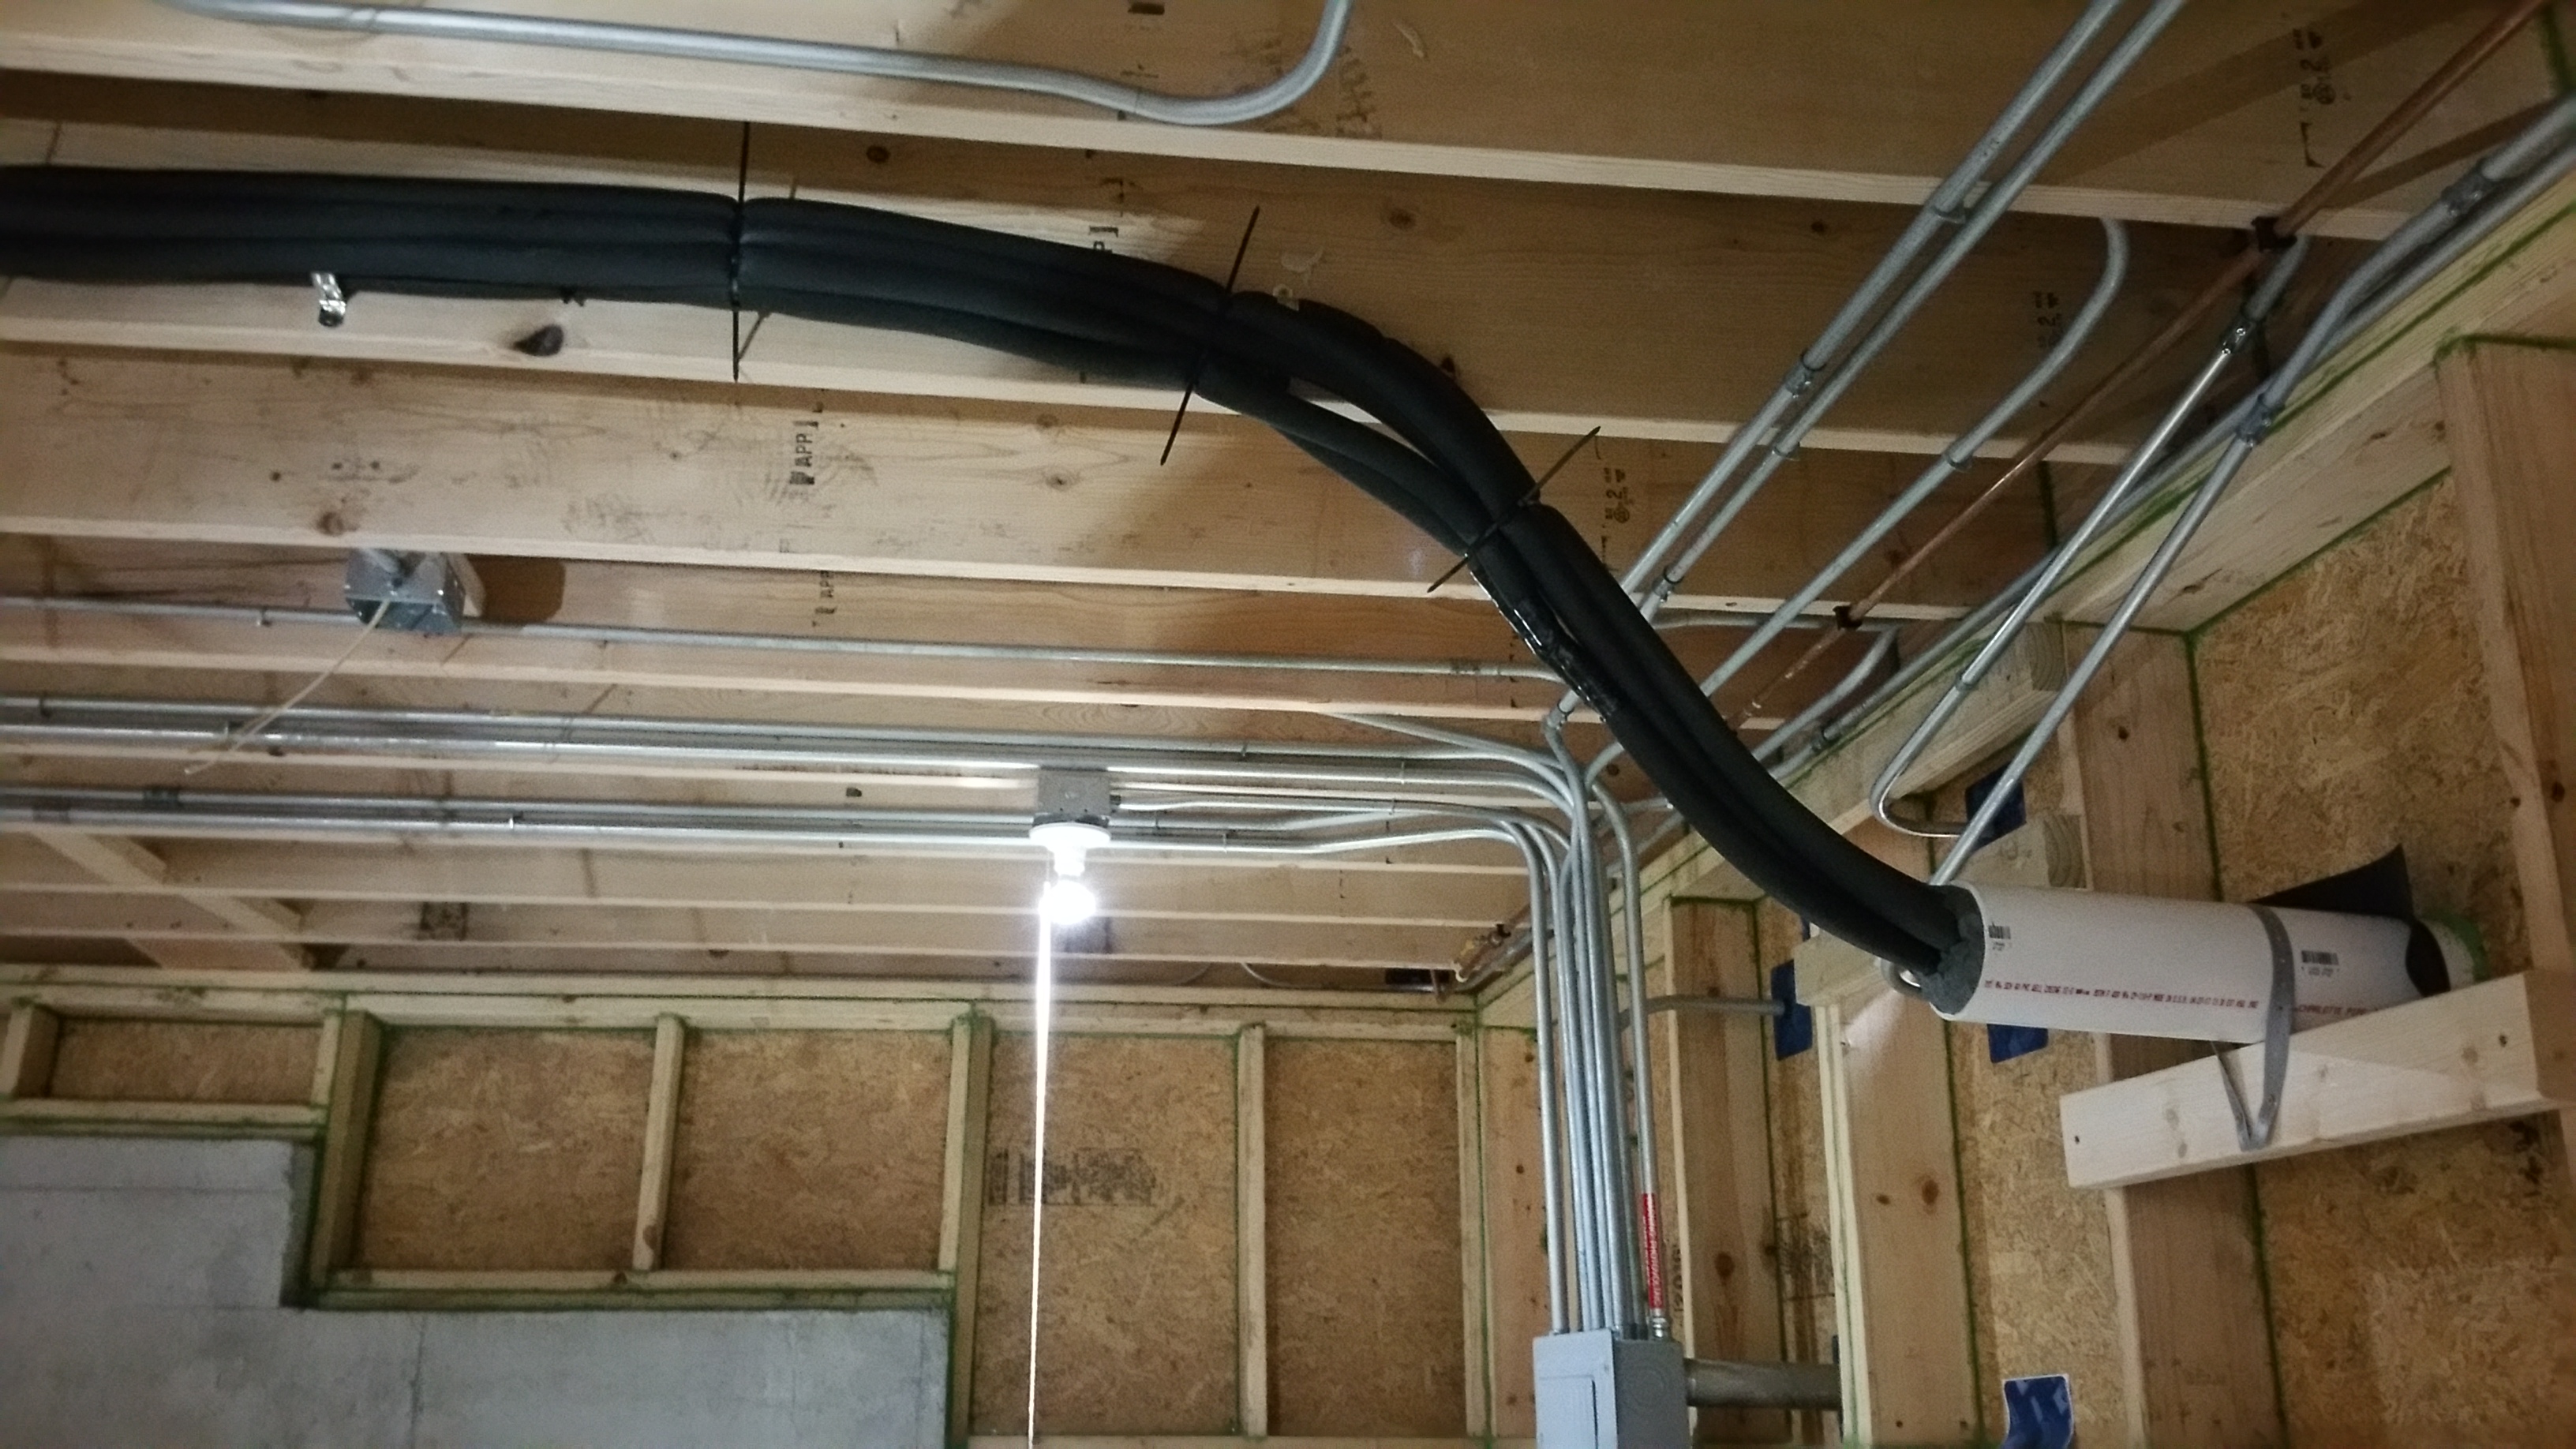 heat pump refrigerant lines - int. leaving basement